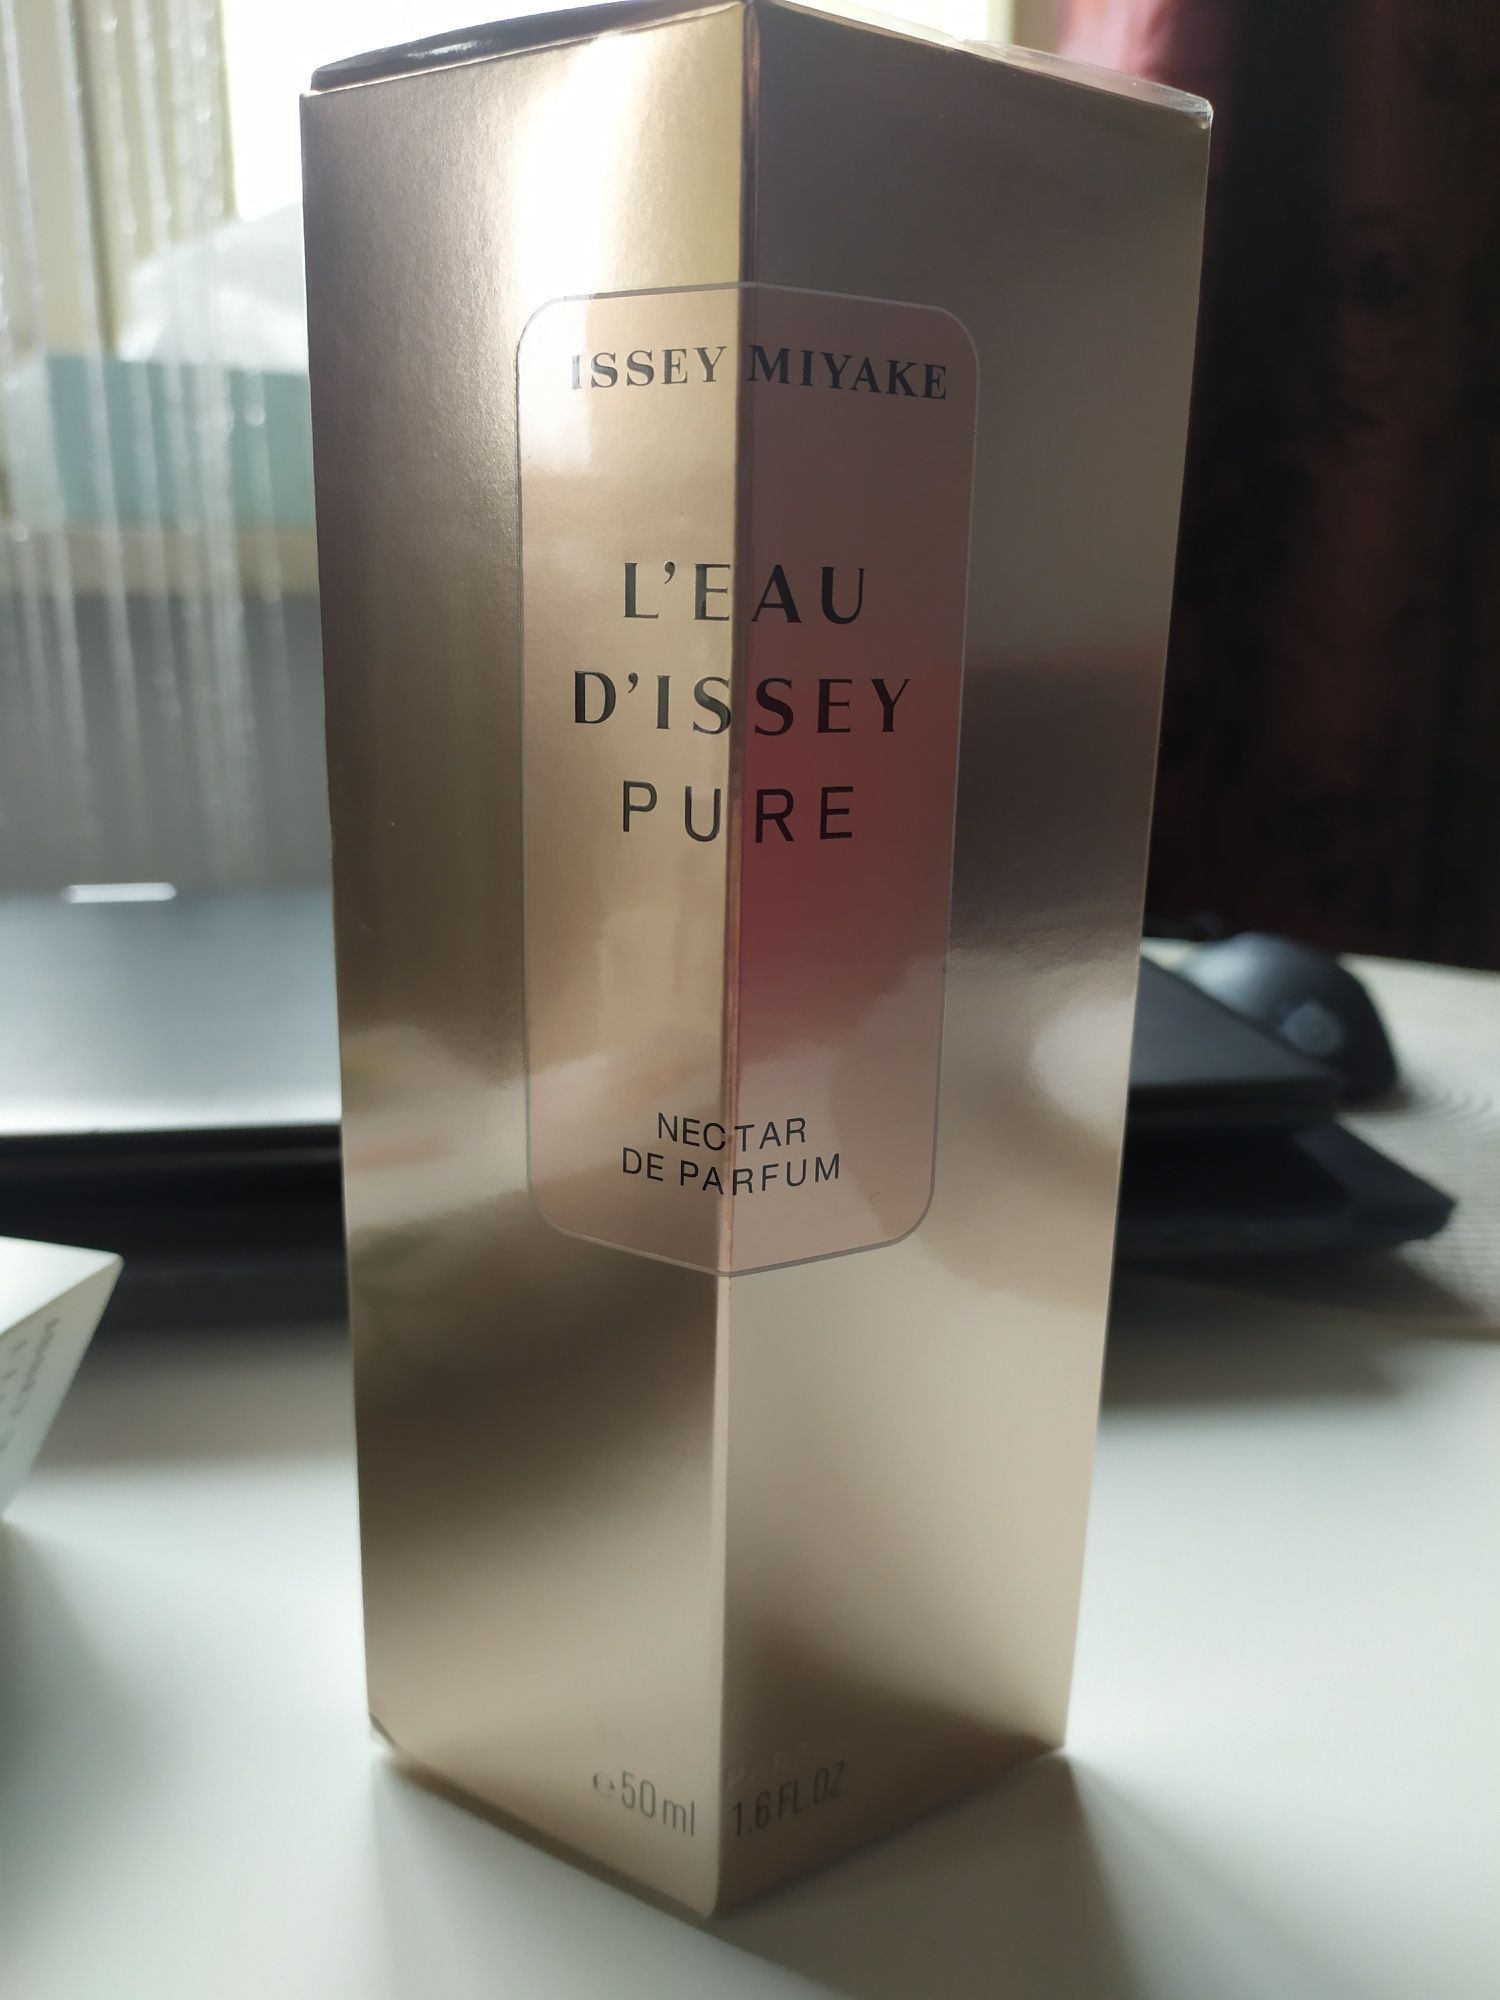 Issey Miyake l'eau d'issey Pure Nectar de parfum